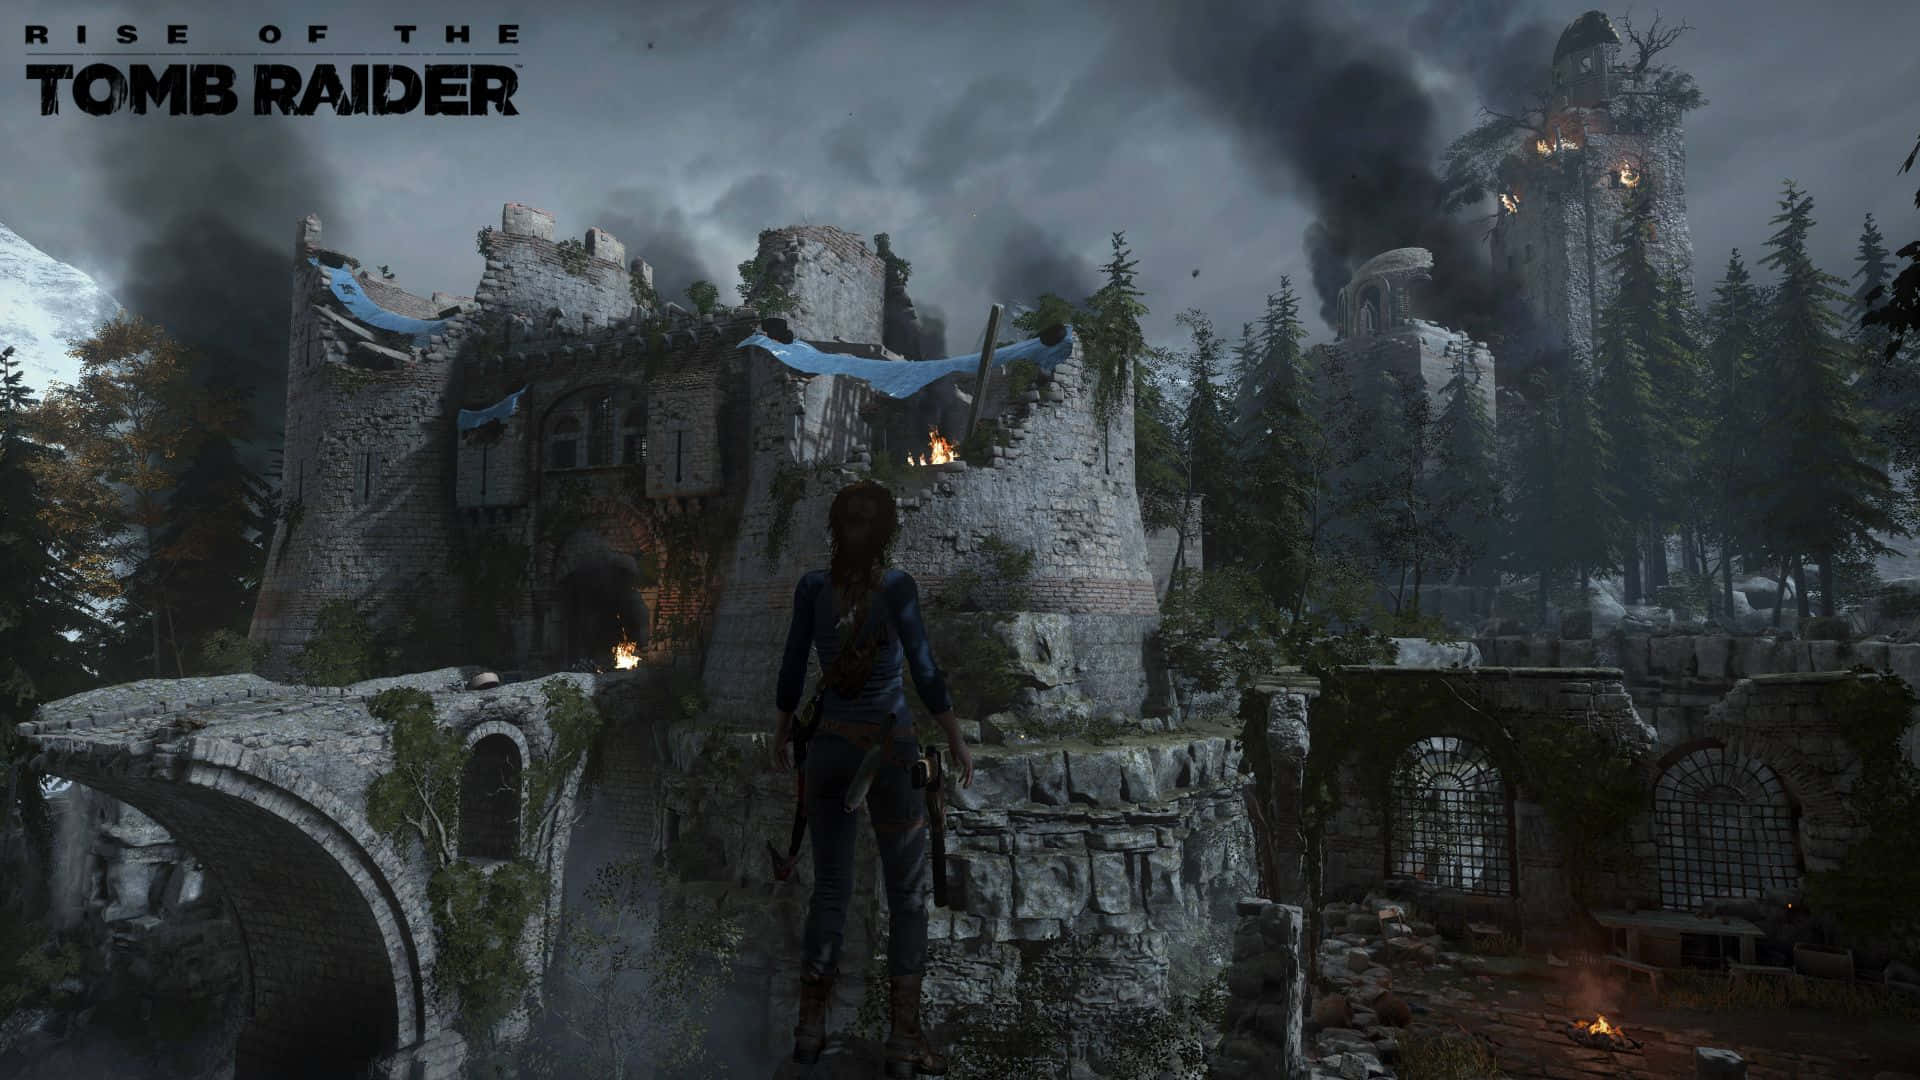 Fondode Pantalla Del Castillo Oscuro De Rise Of The Tomb Raider En 1080p.